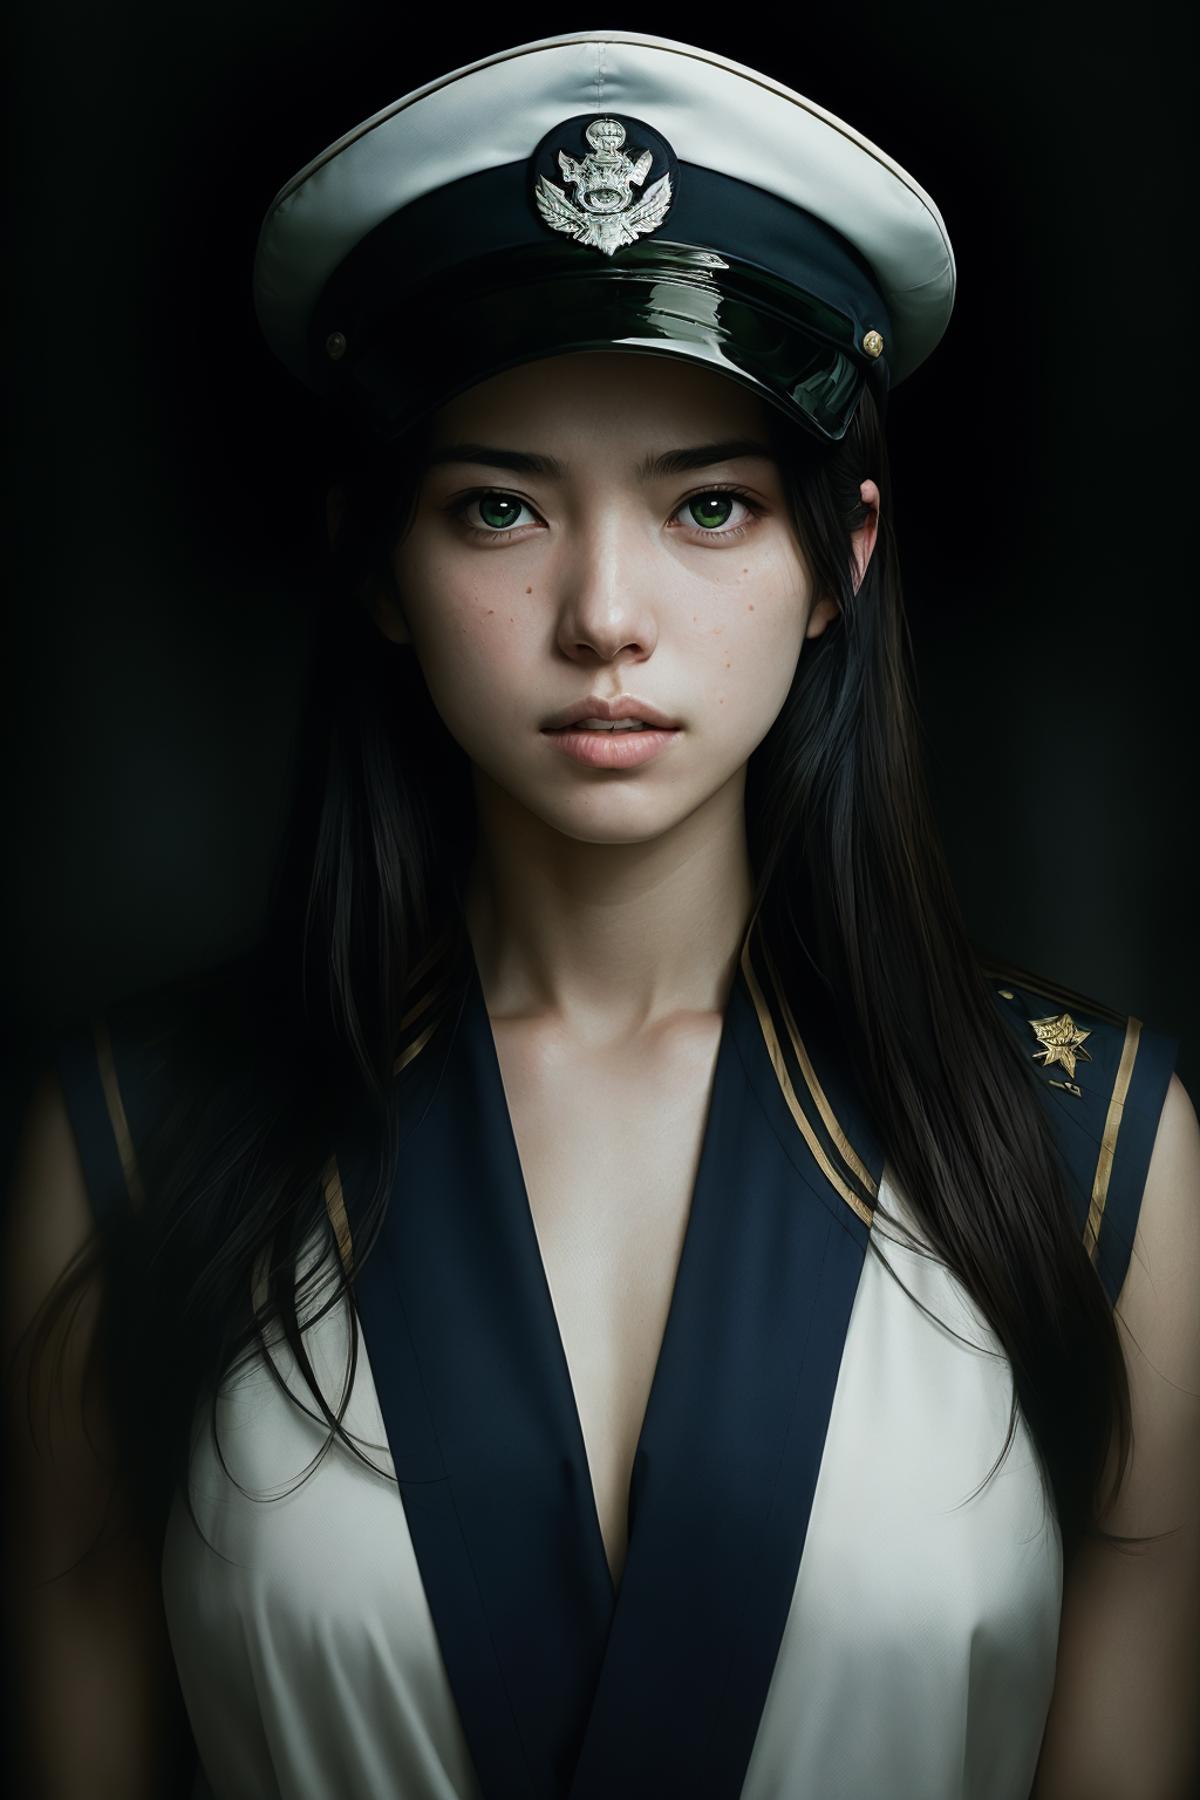 AI model image by TangBohu